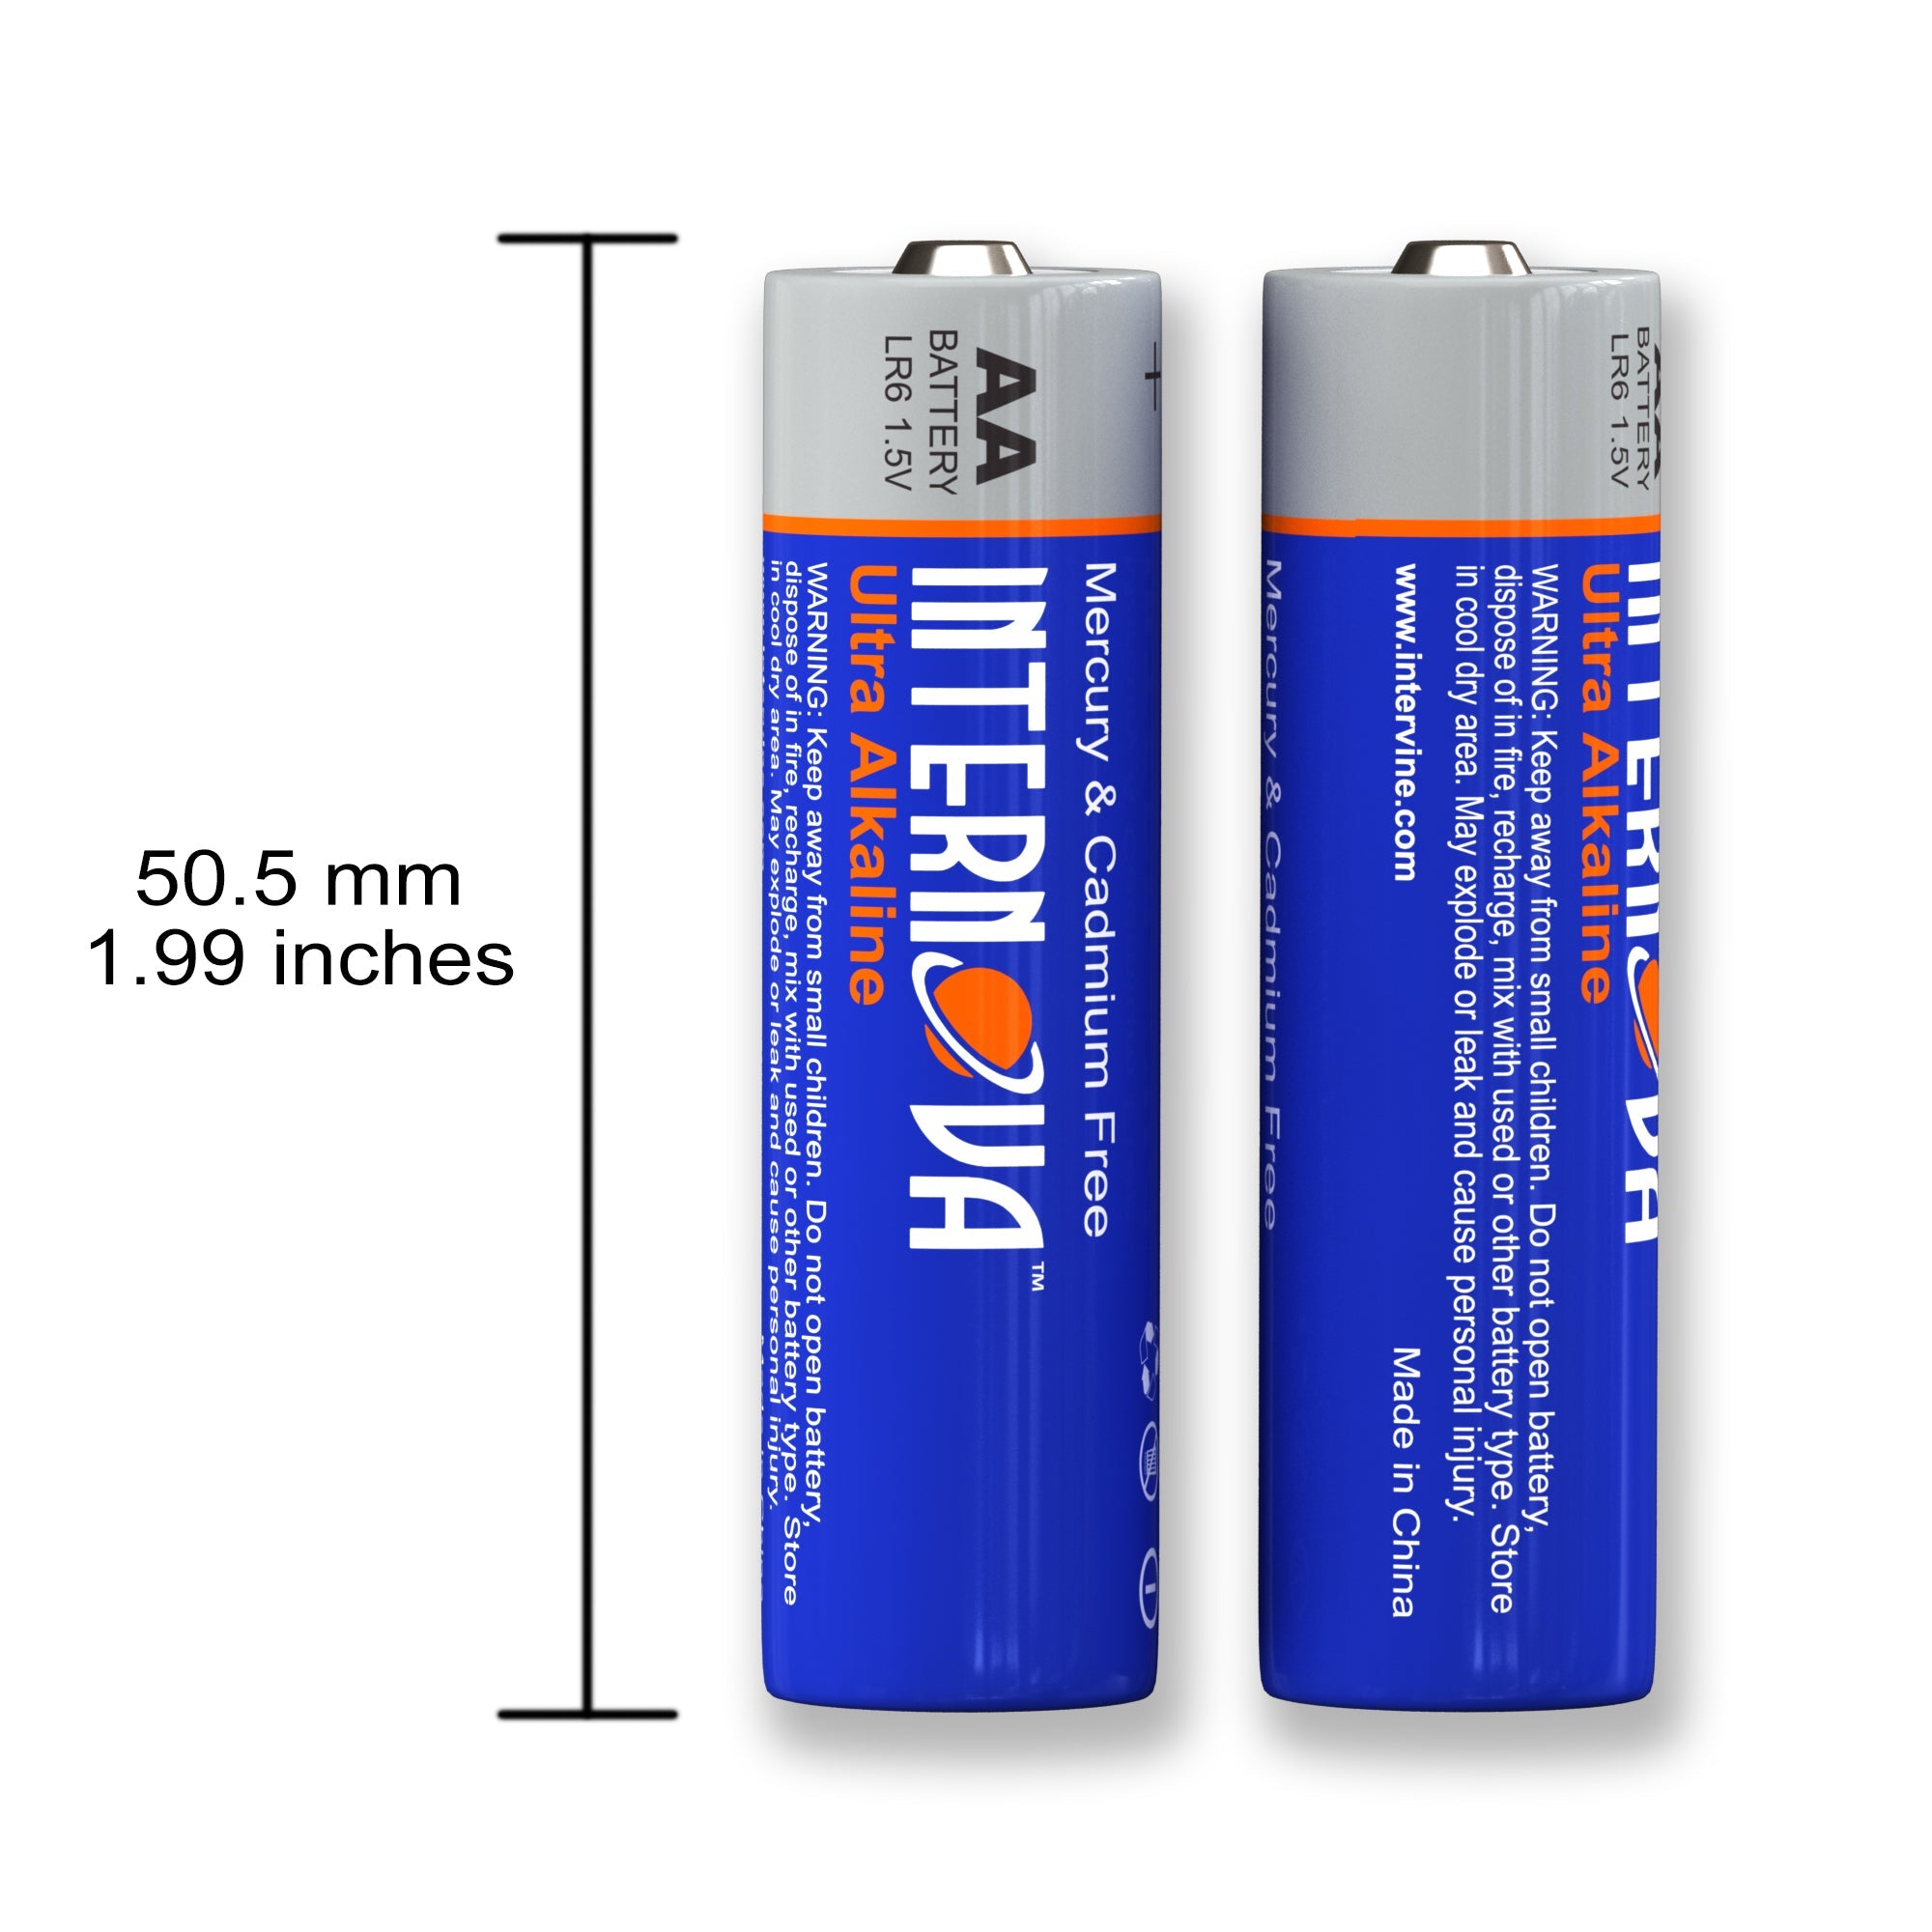 Internova Ultra Alkaline AA Batteries, Double A LR6 1.5V Cell High Performance, 4 Pack